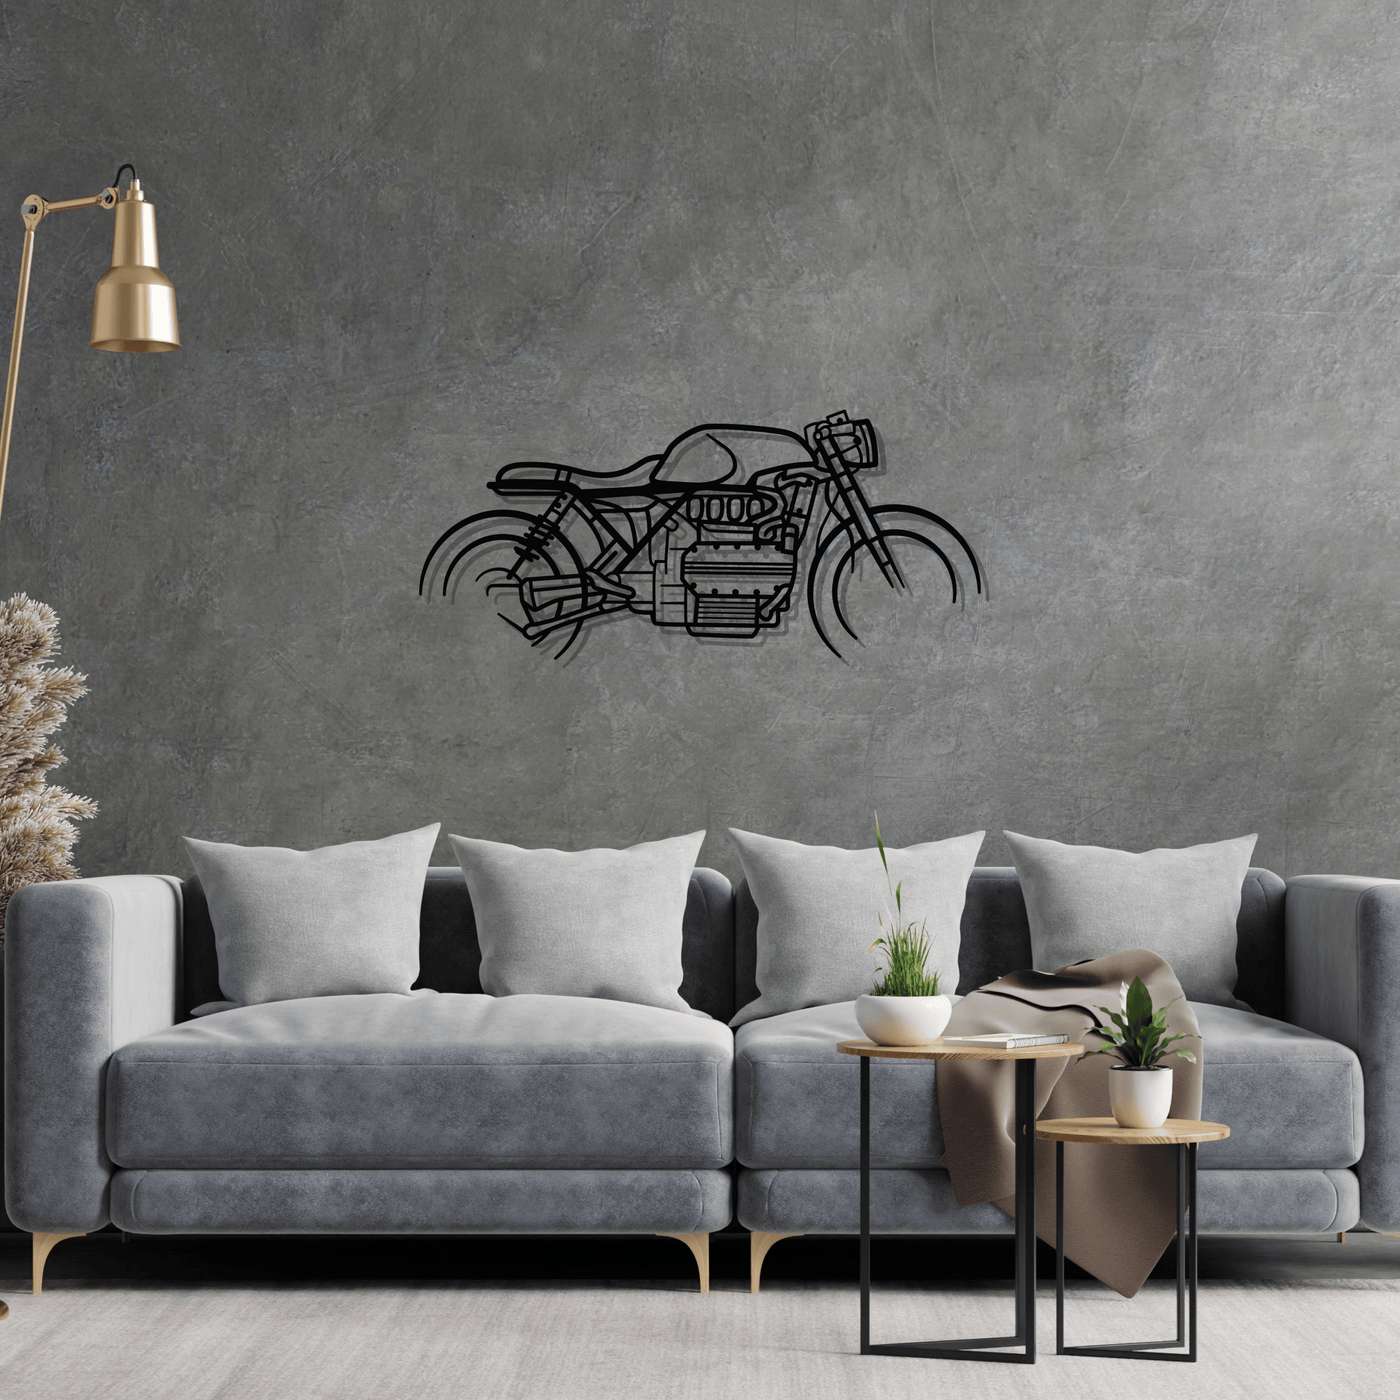 K1100 Cafe Racer Metal Silhouette Wall Art